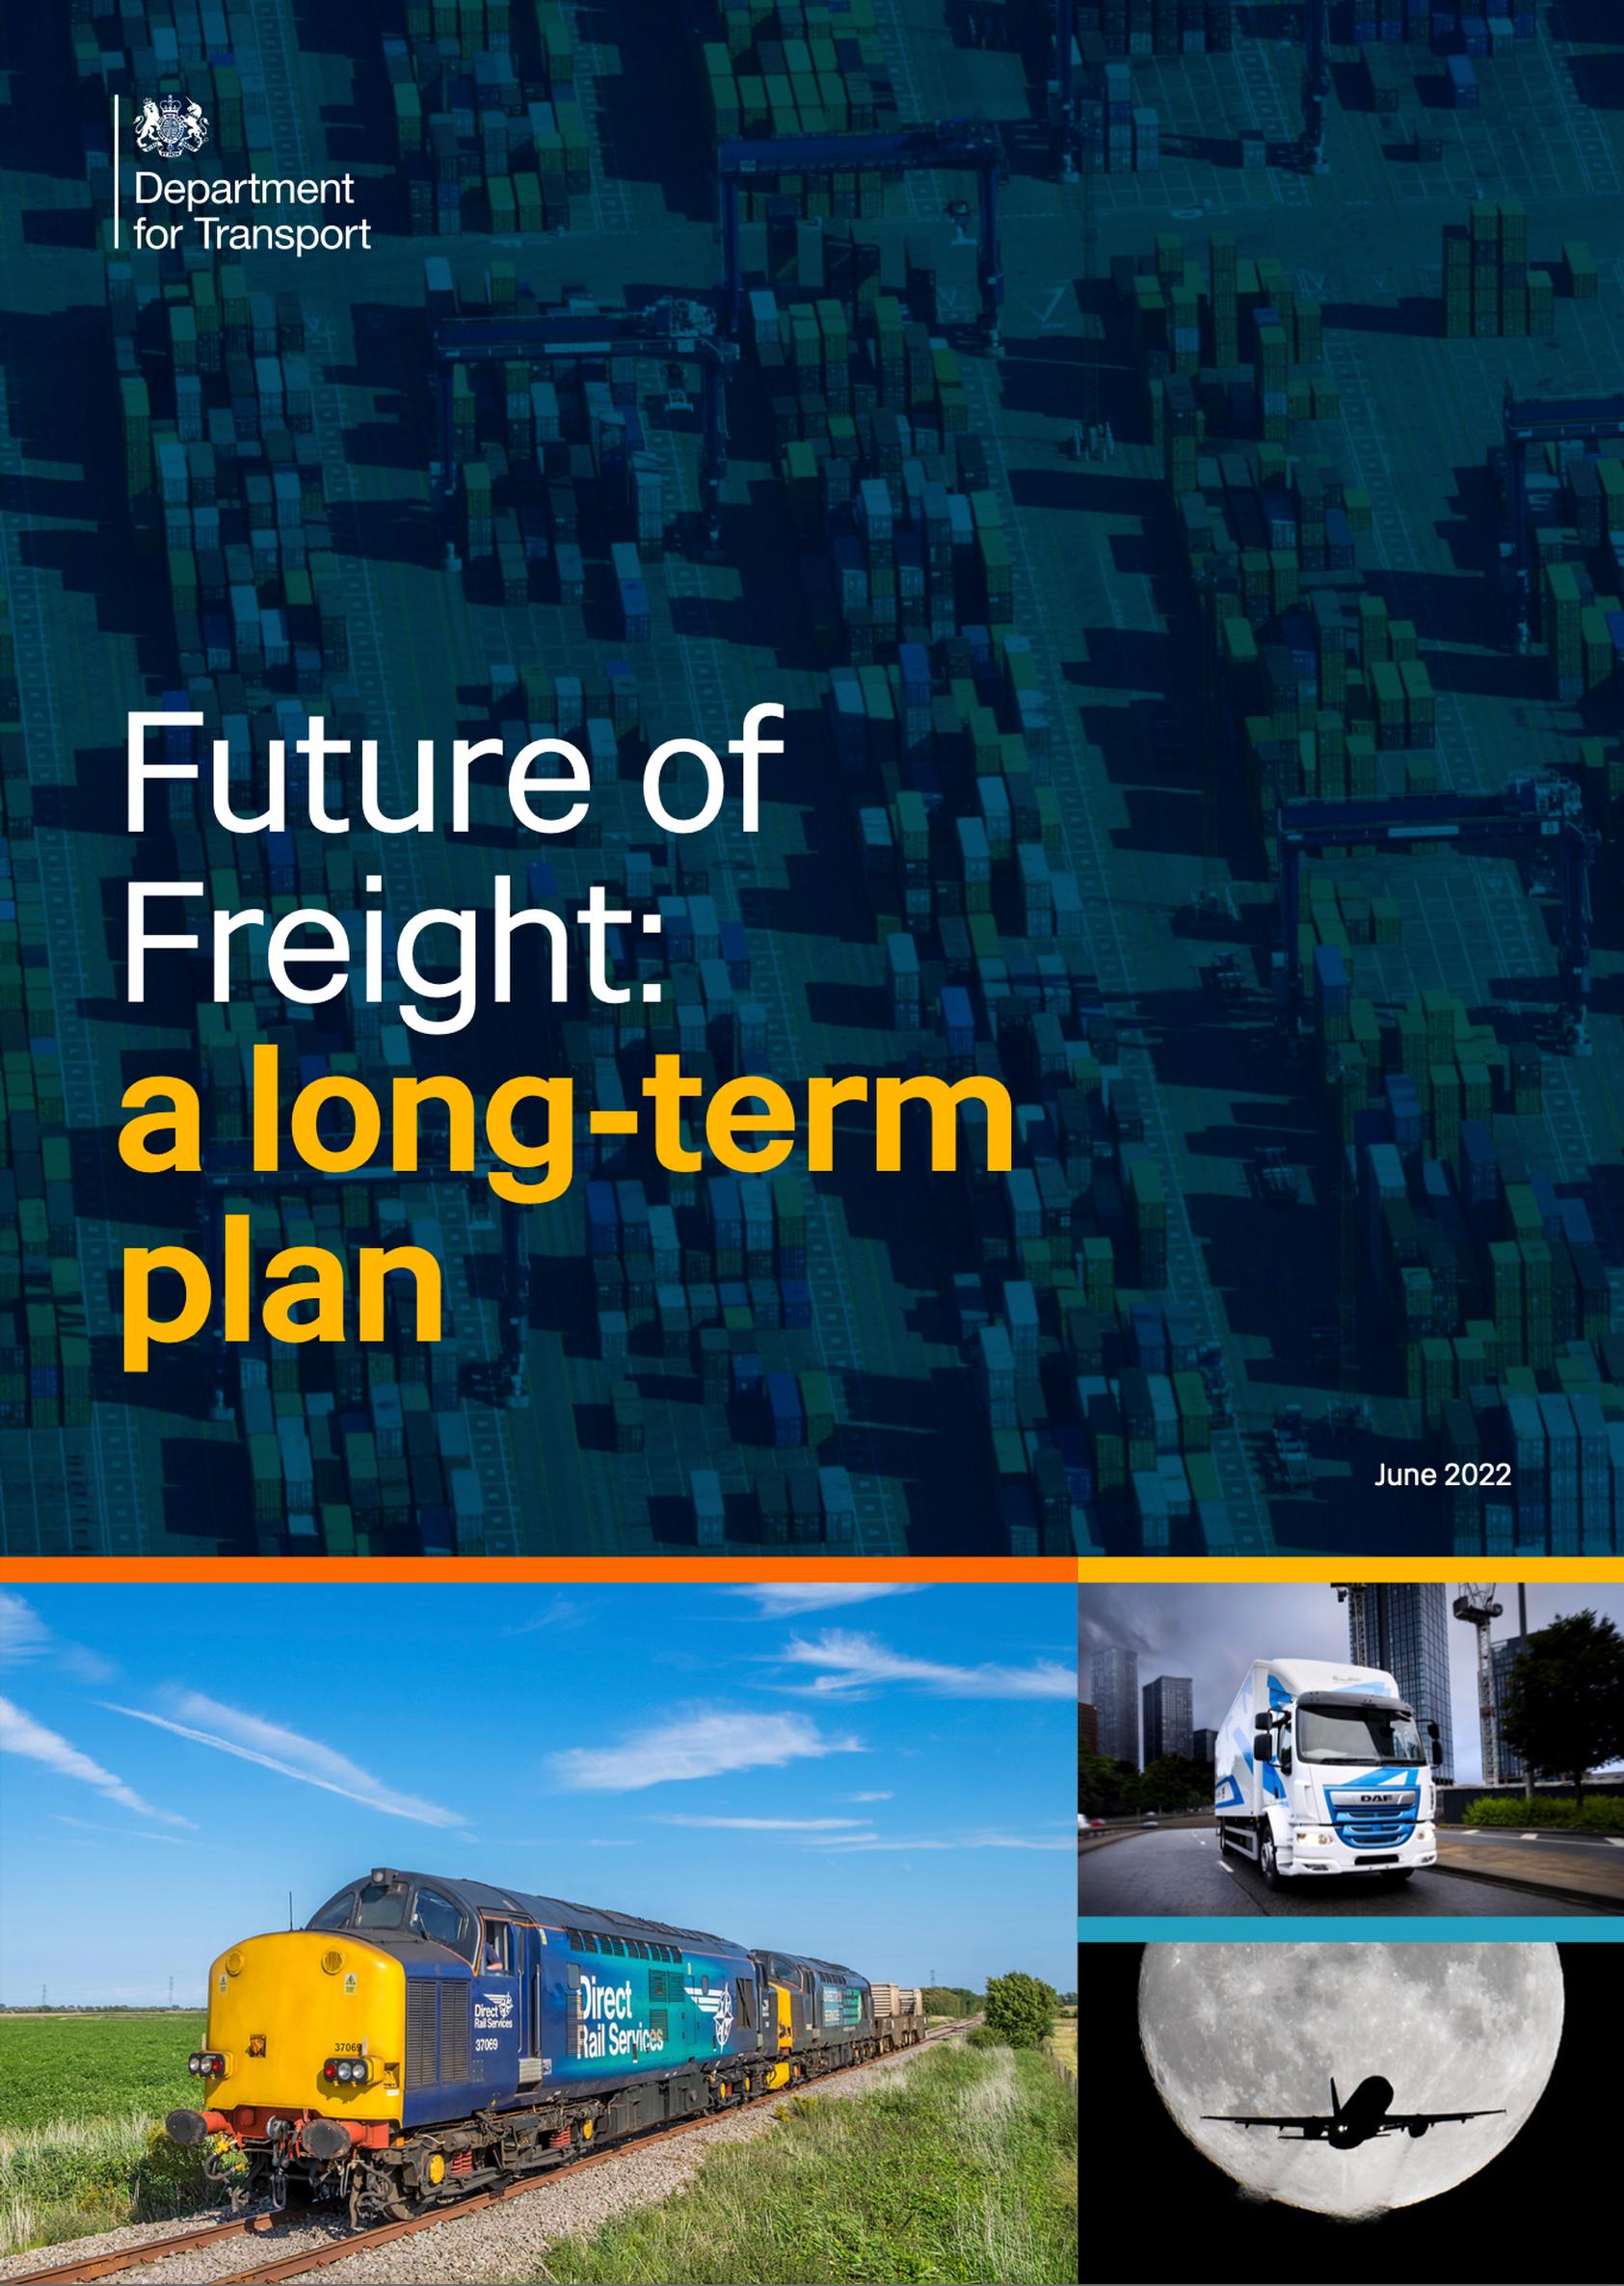 Cross-modal working will help UK freight meet net zero targets, DfT says